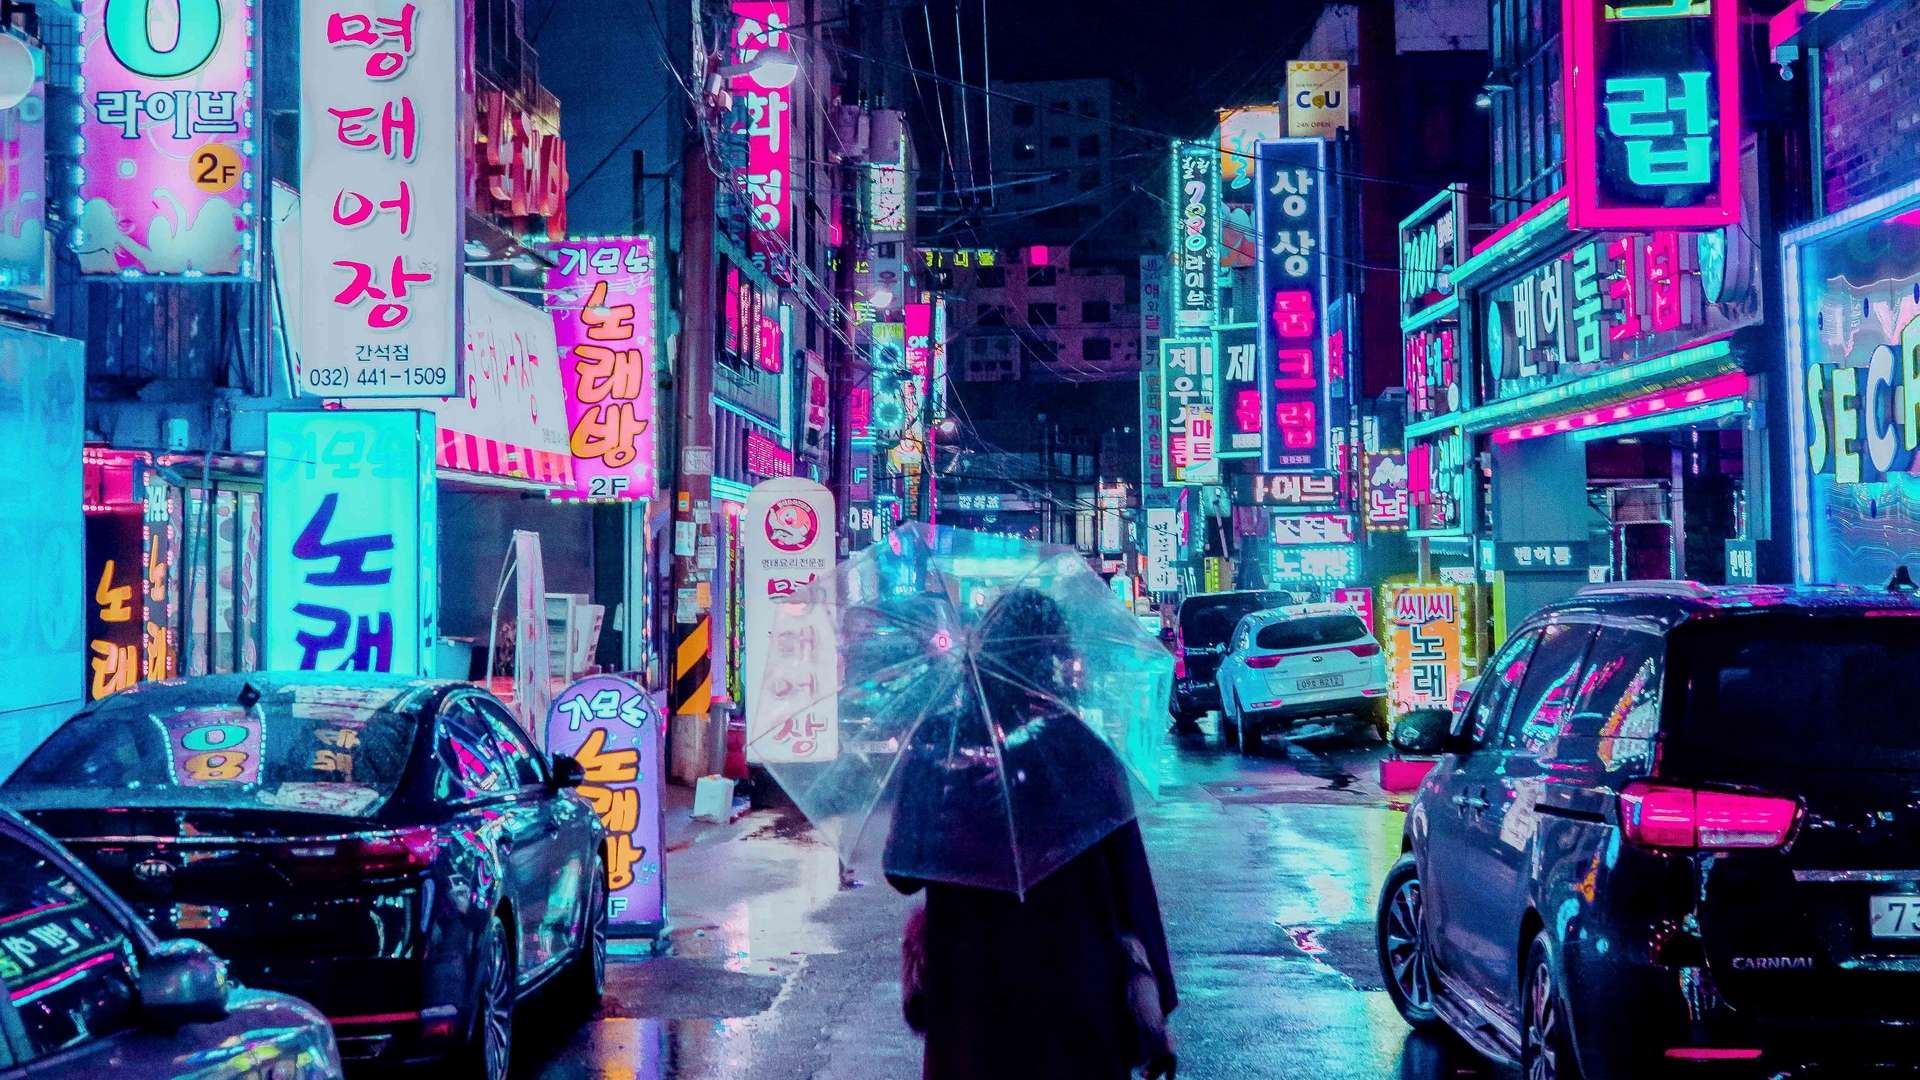 Cyberpunk Neon City Wallpapers - Top Free Cyberpunk Neon City ...